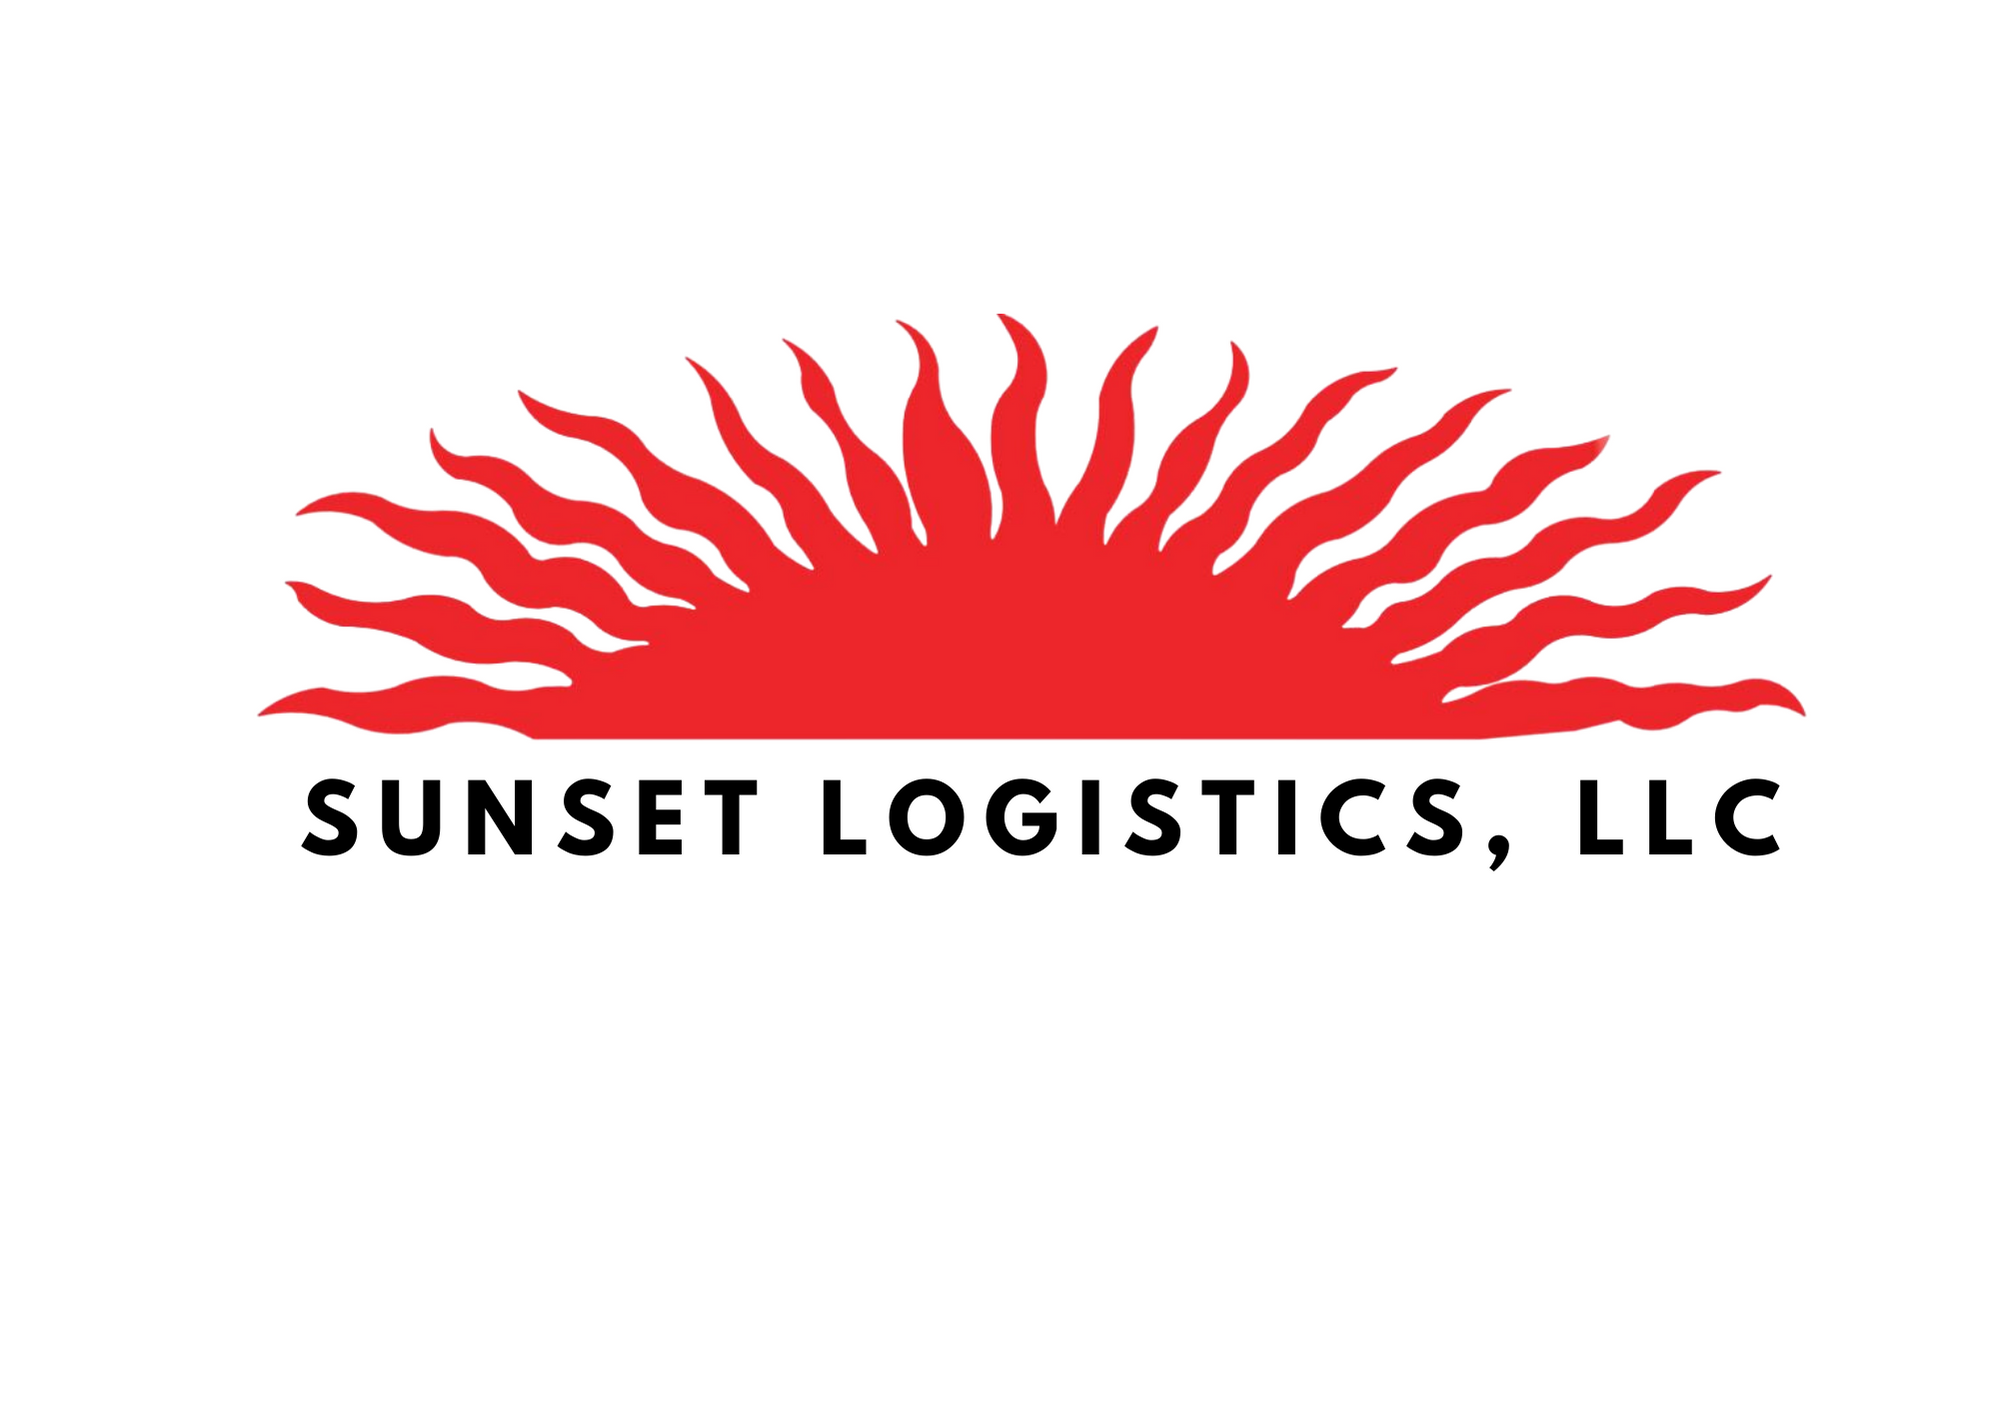 Sunset Logistics